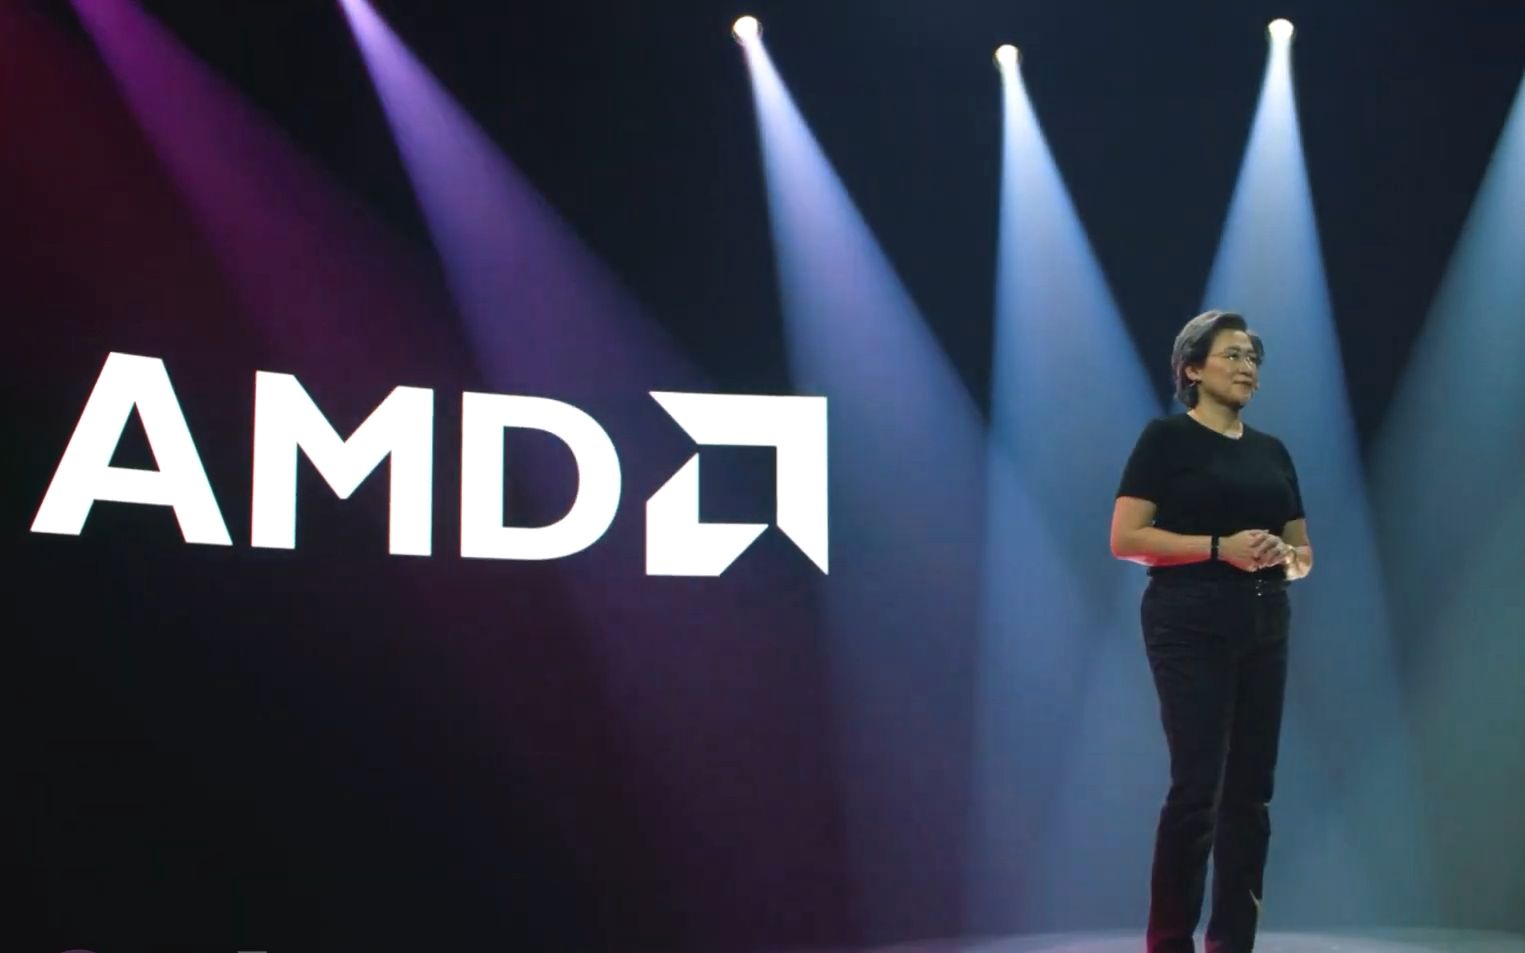 AMD苏妈表情包图片